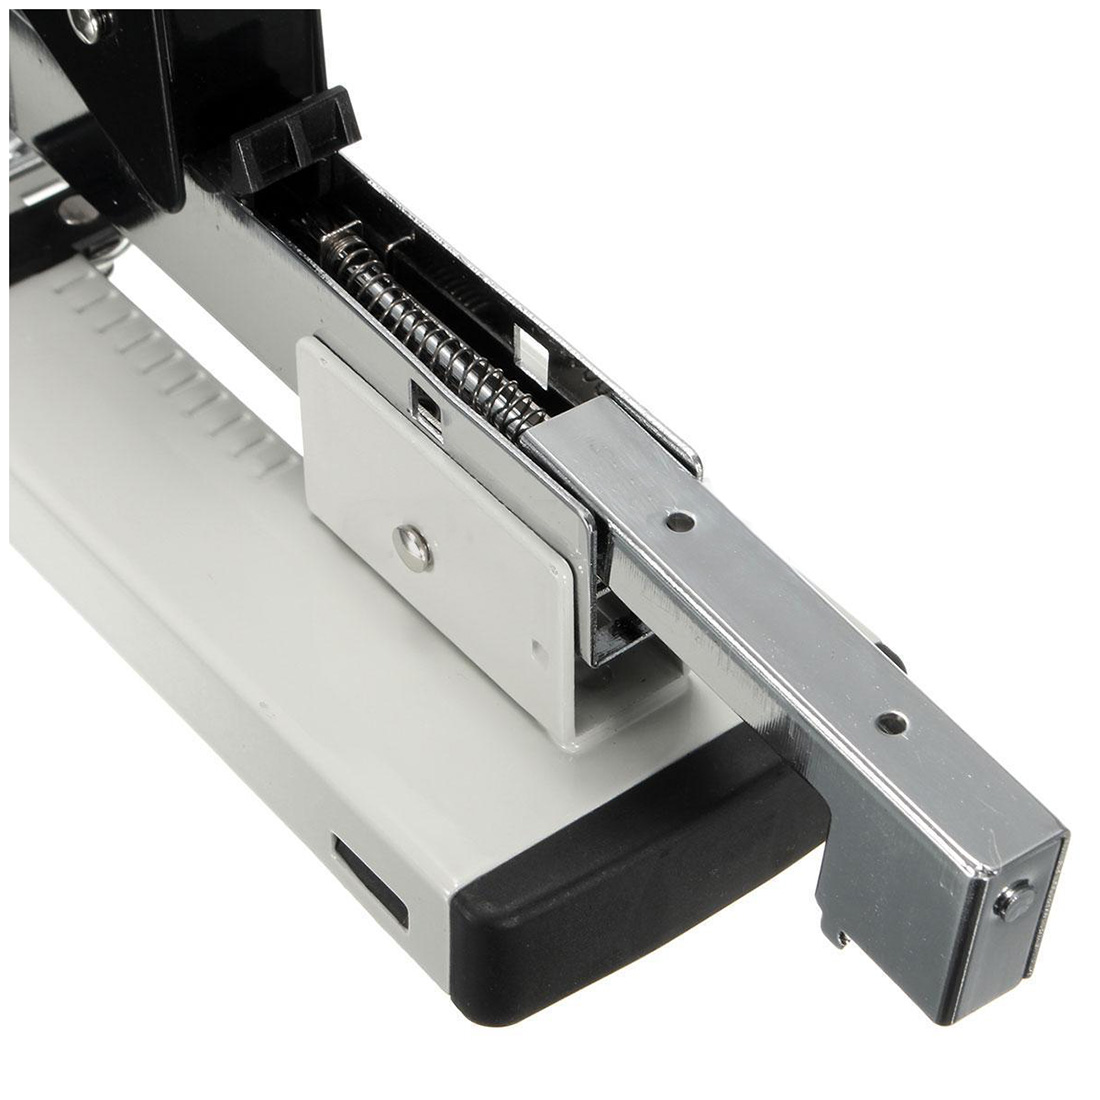 BLEL Hot Sale Huapuda Heavy-Duty Stapler Manual Metal Stapler Bookbinding Stapling 120 Sheet Capacity Office Tools